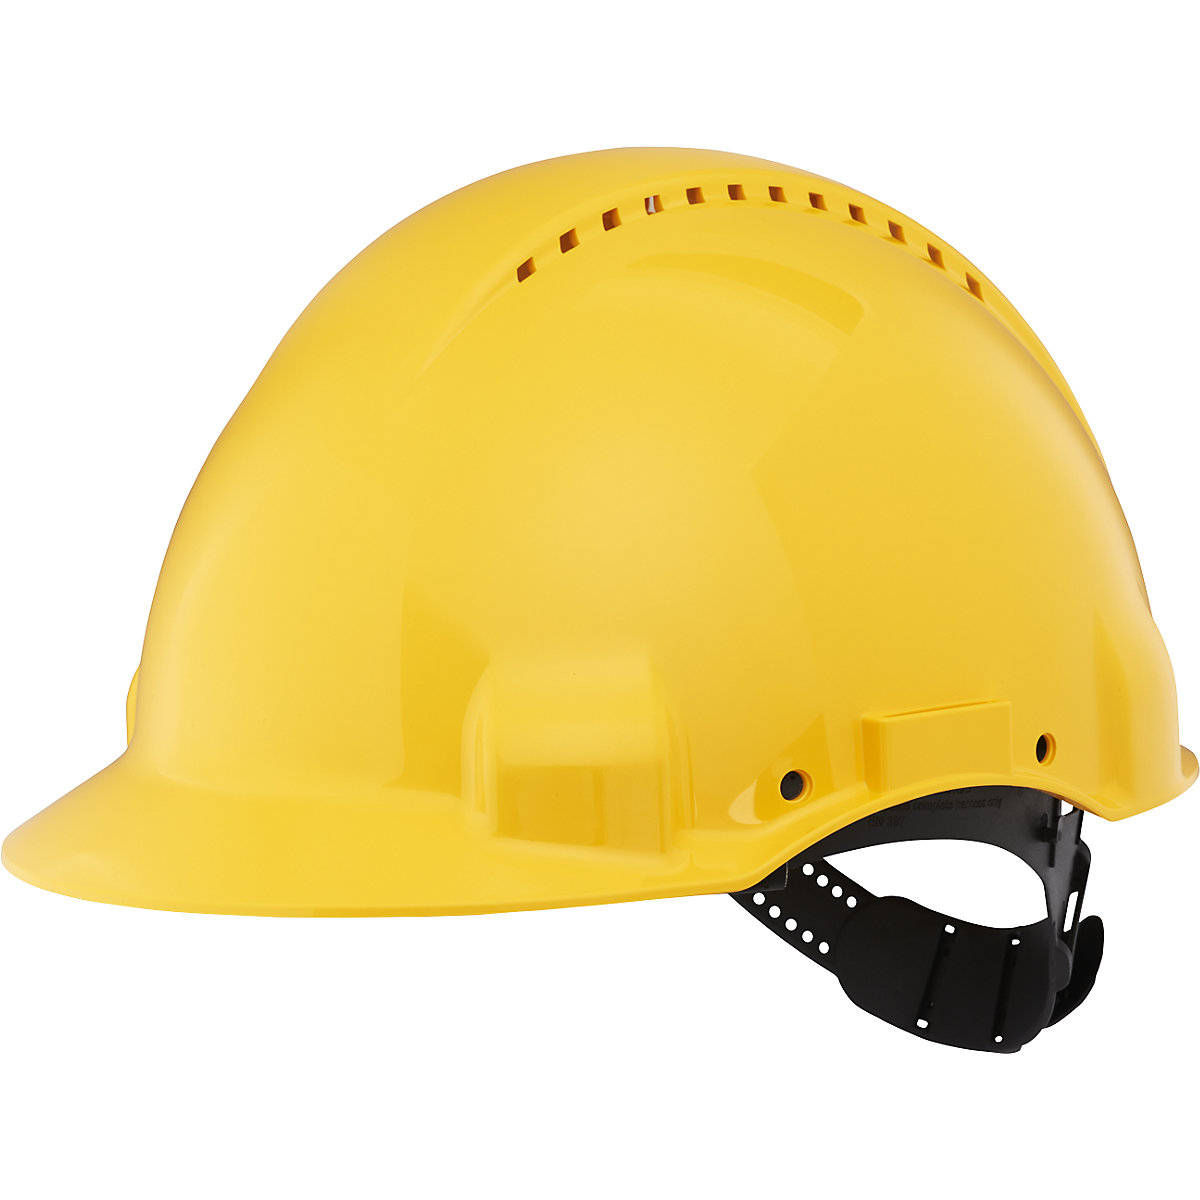 Safety helmet G3000 ventilated – 3M